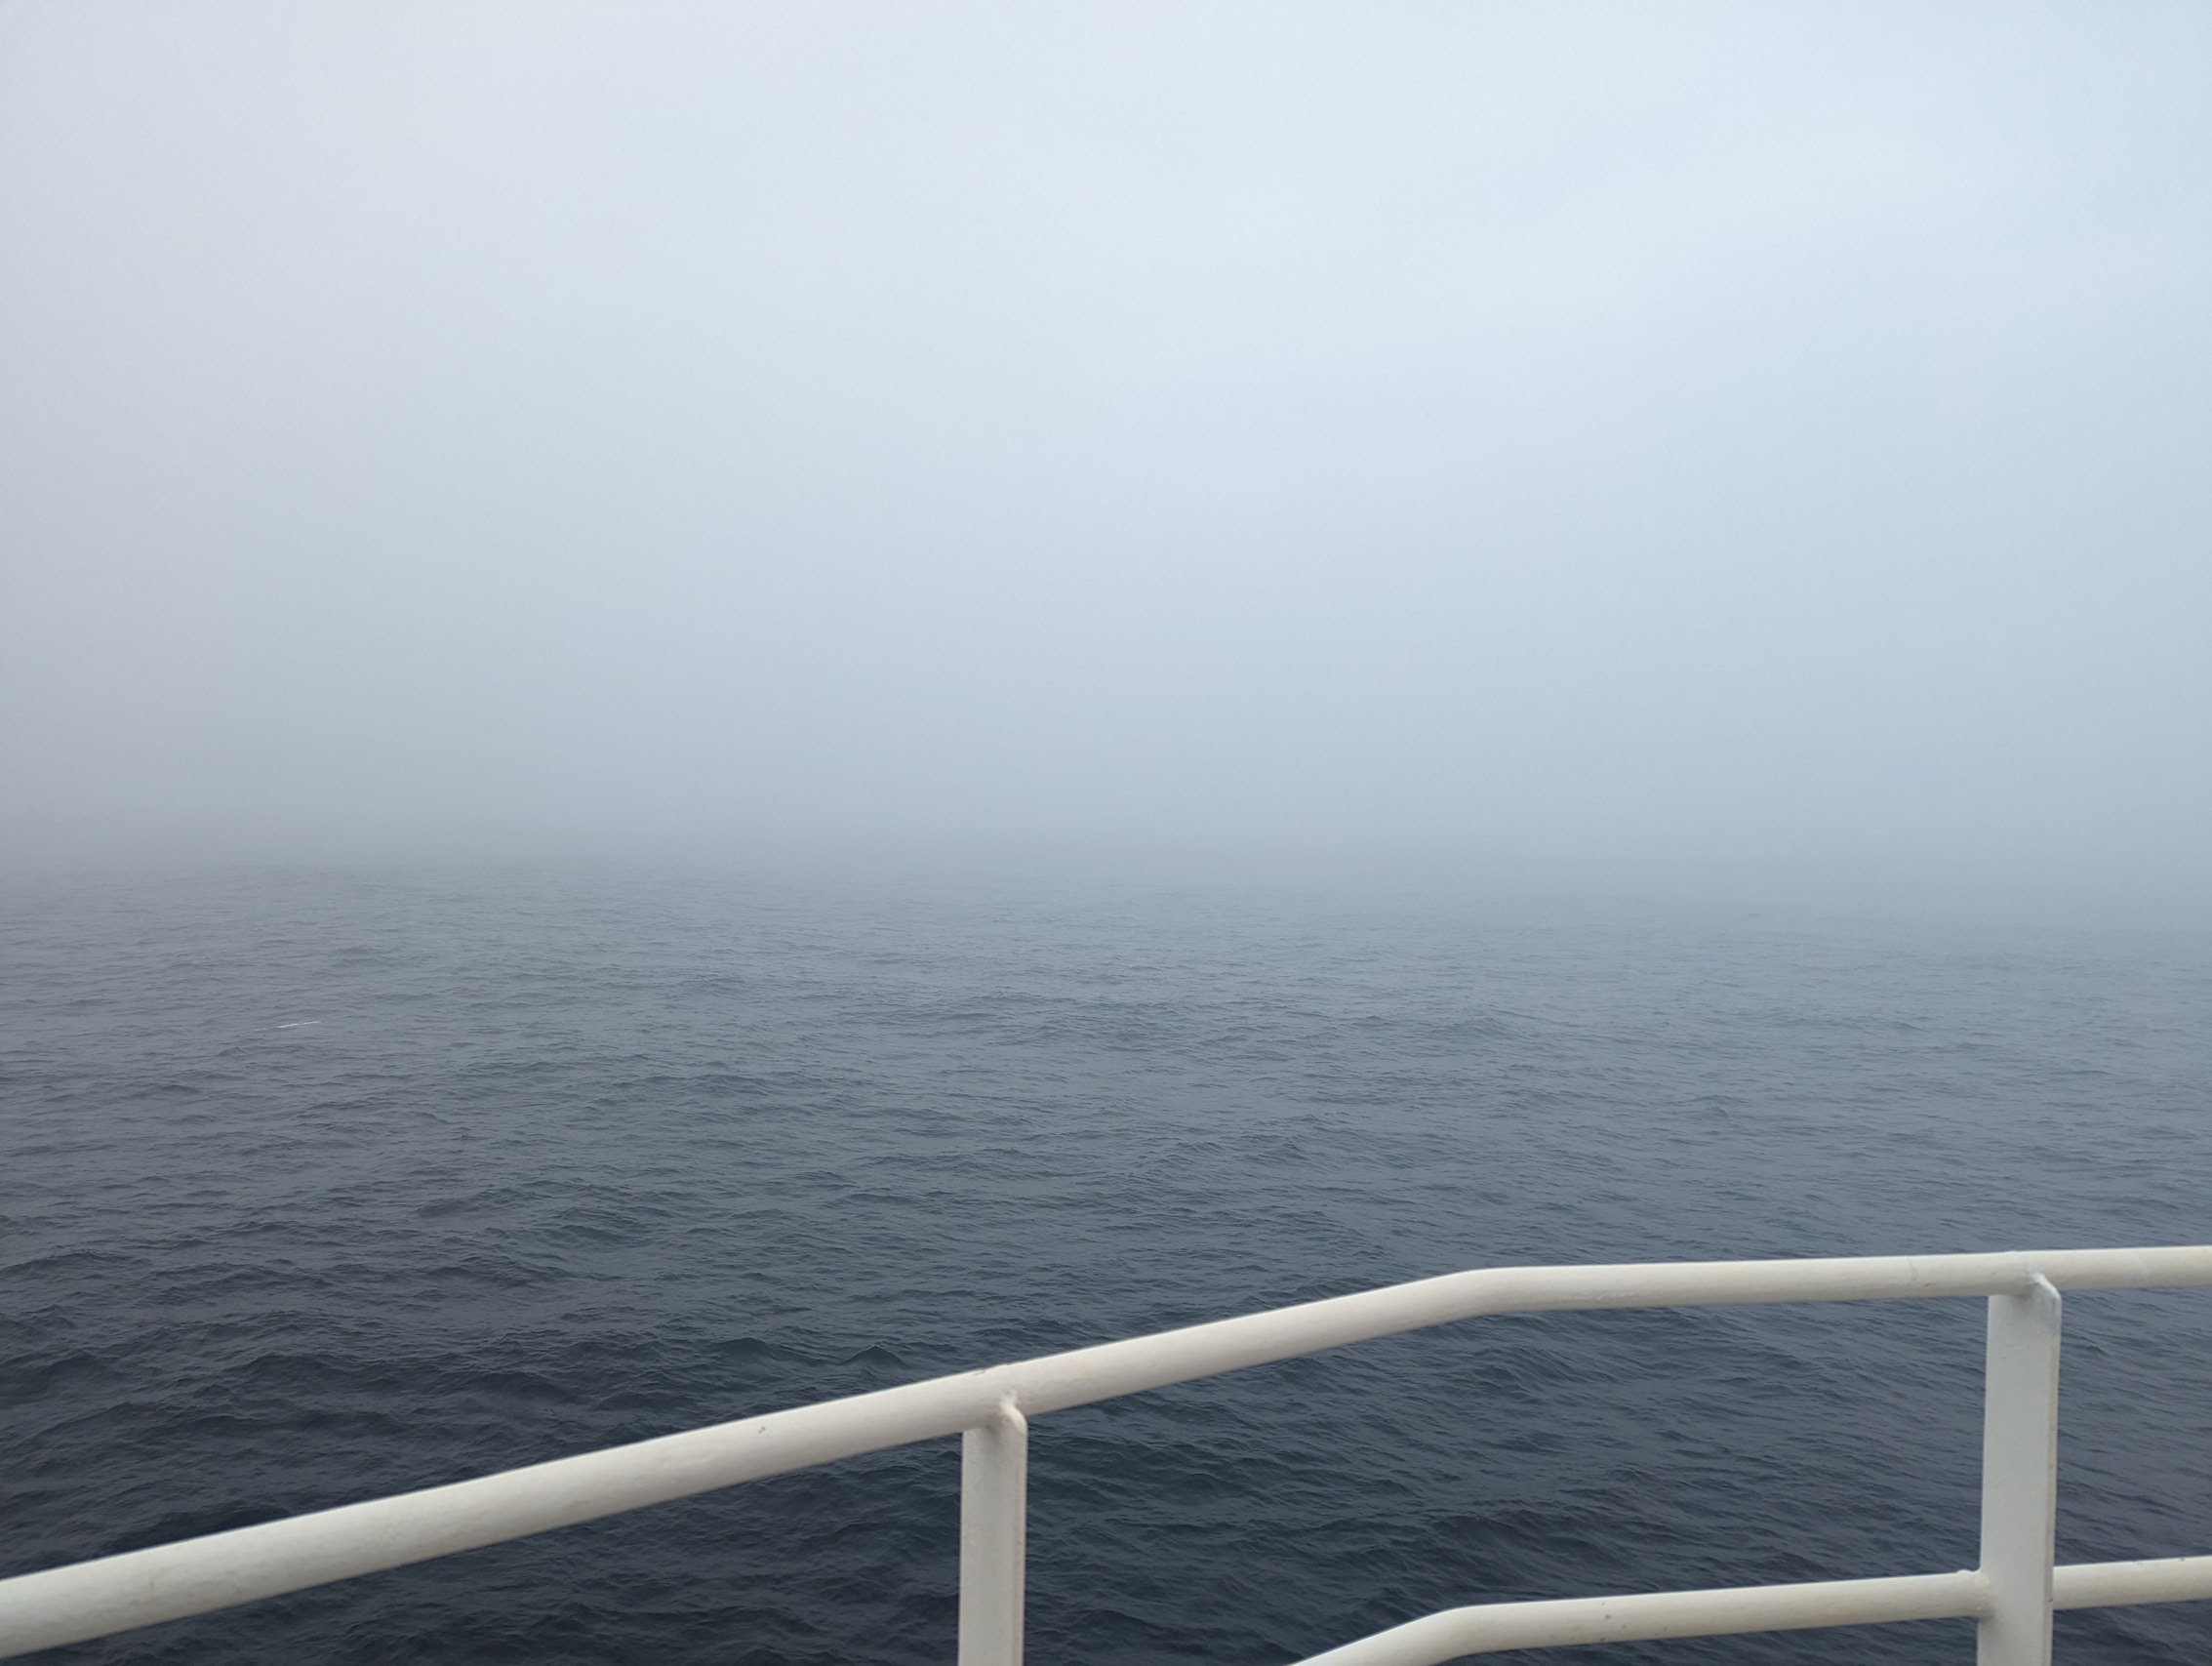 image of fog lingering over the steely gray ocean